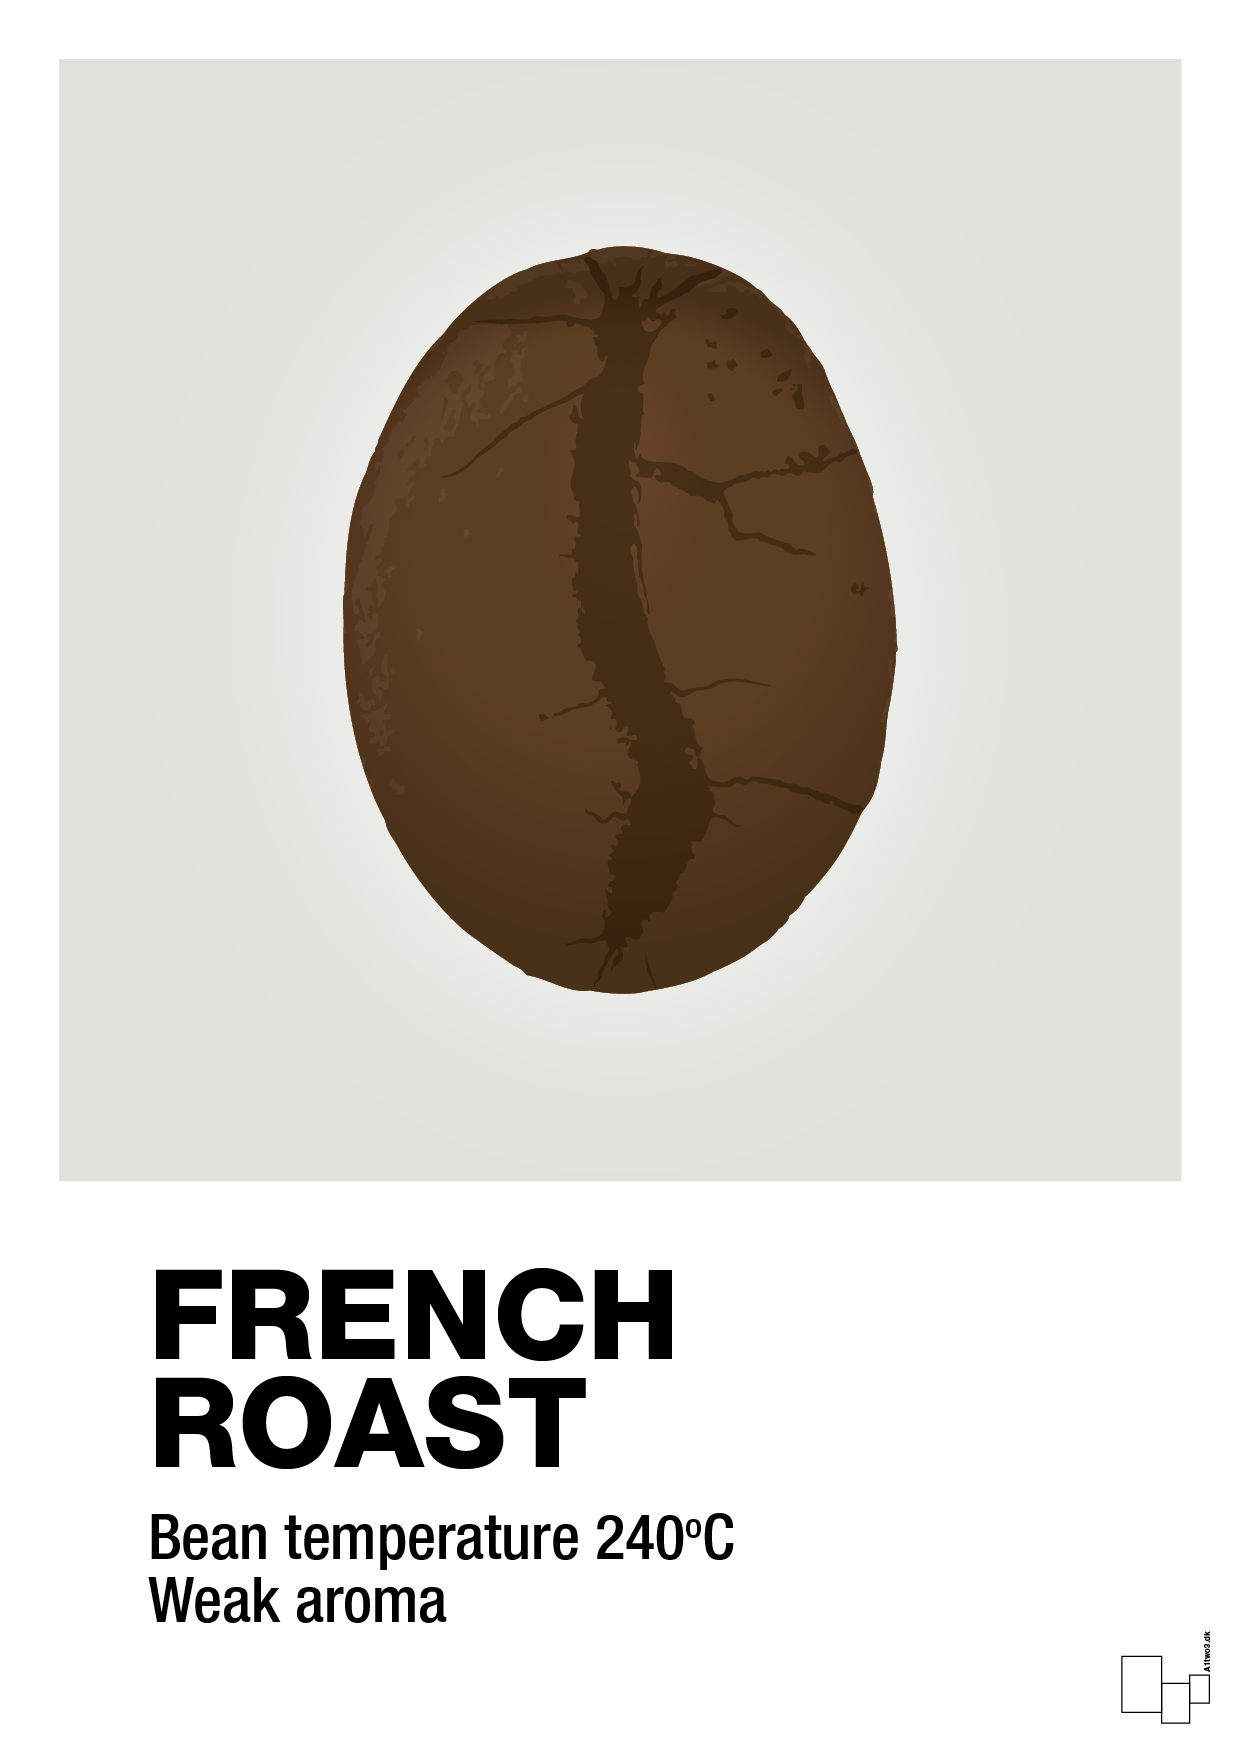 french roast - Plakat med Mad & Drikke i Painters White